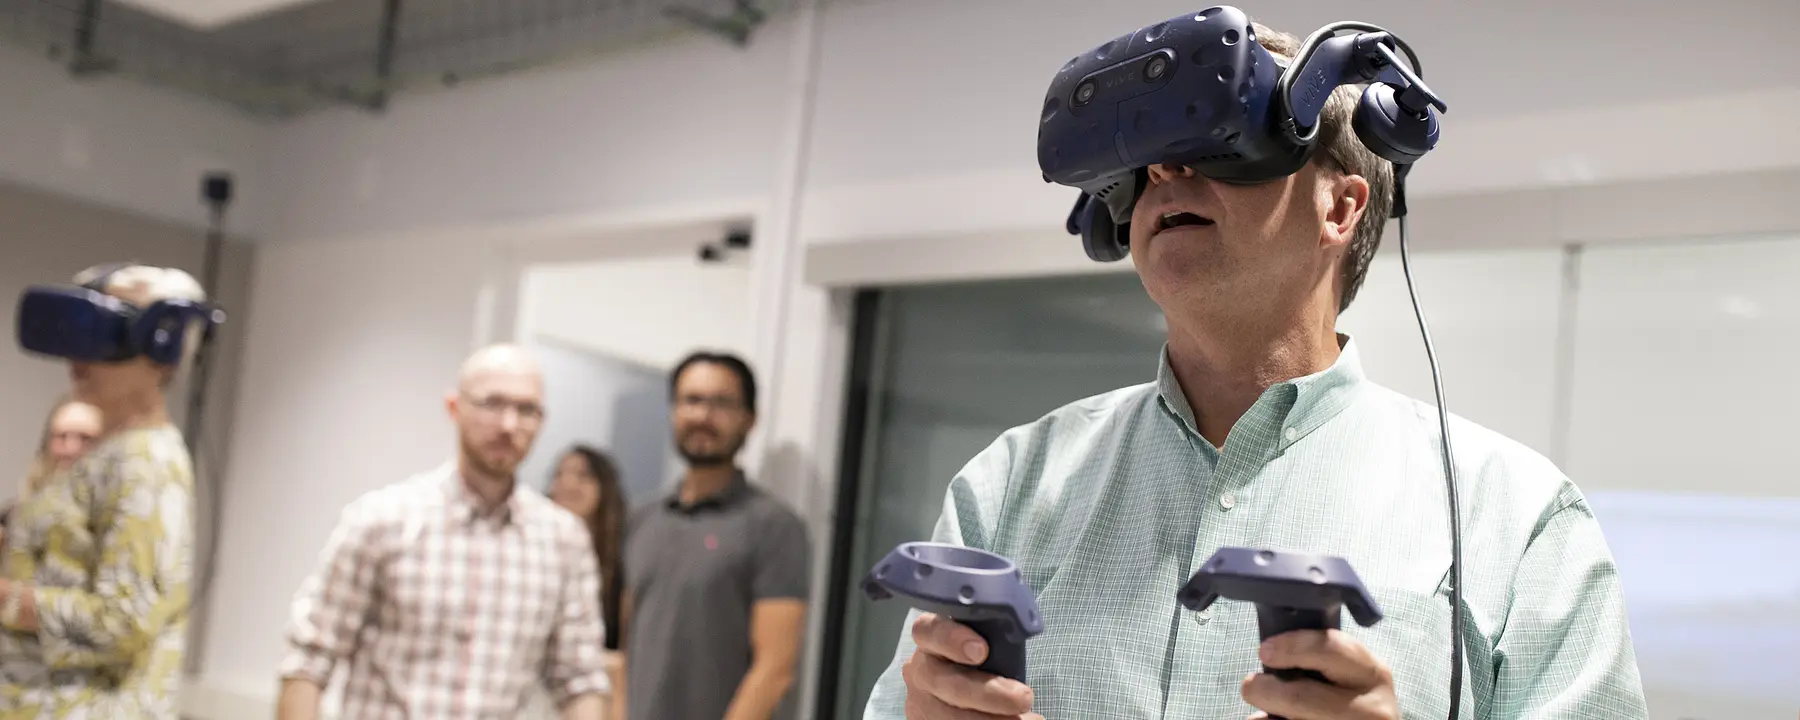 Our executives sample virtual reality